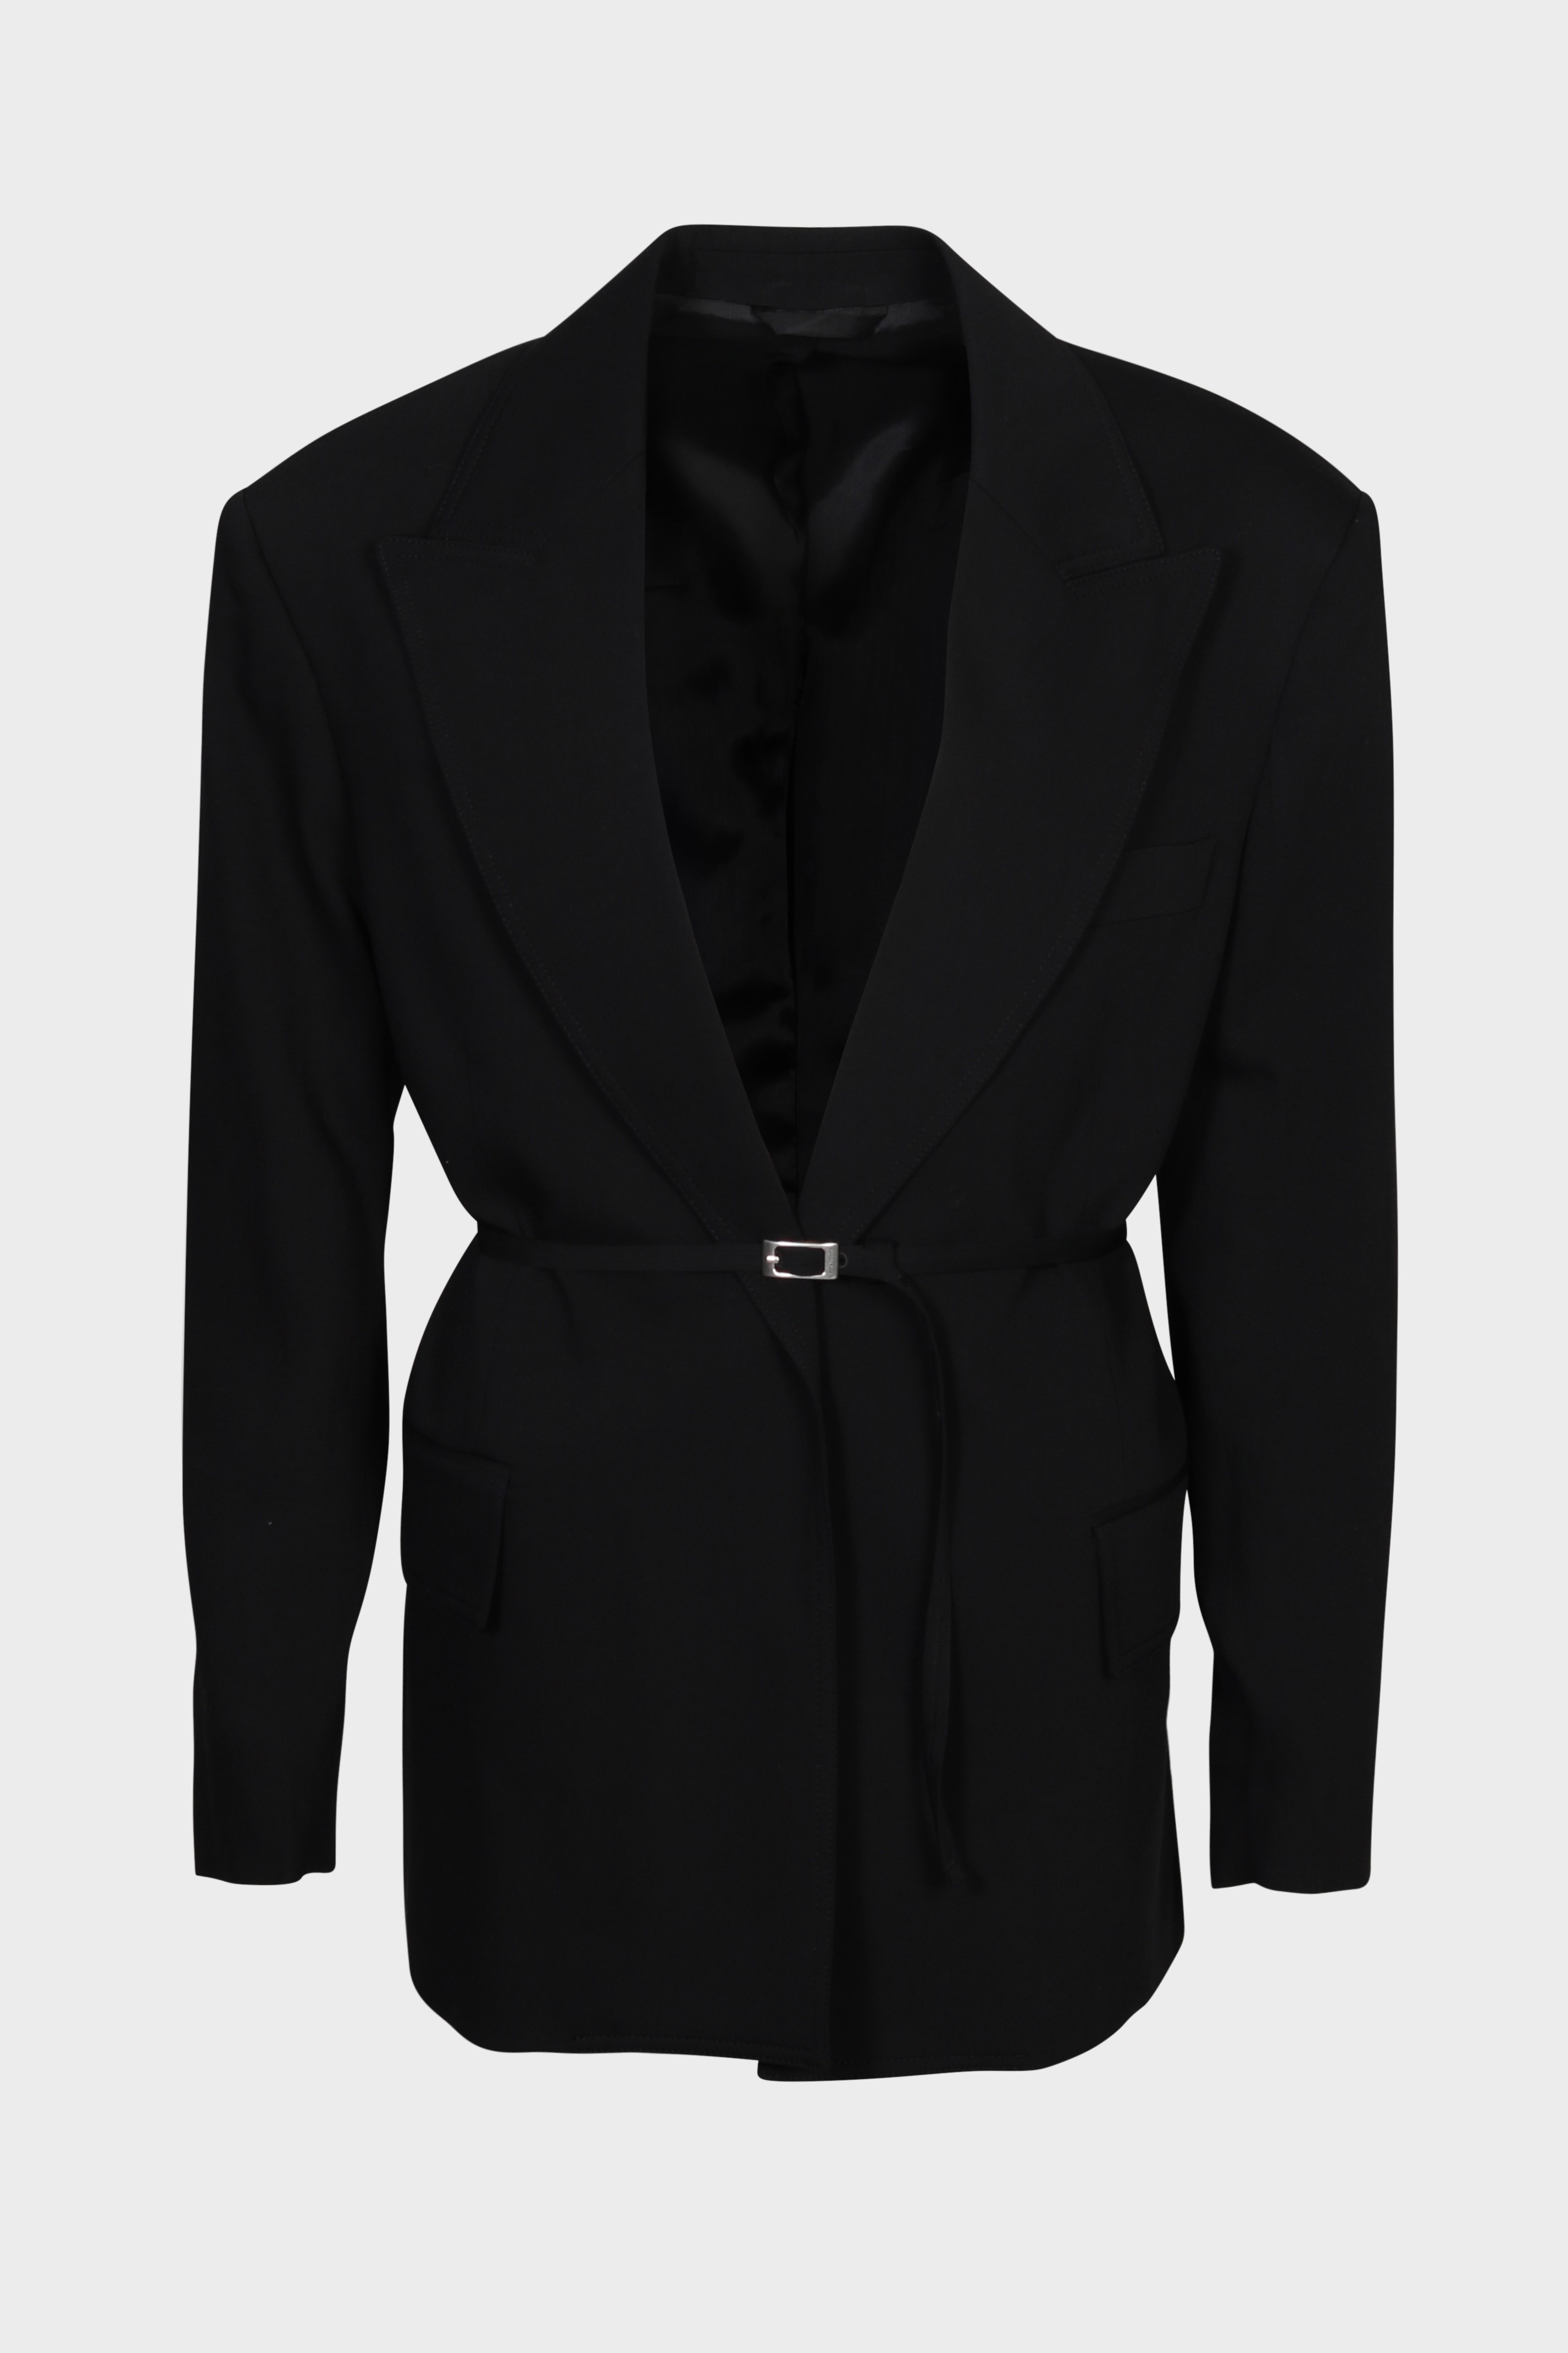 ACNE STUDIOS Suit Jacket in Black